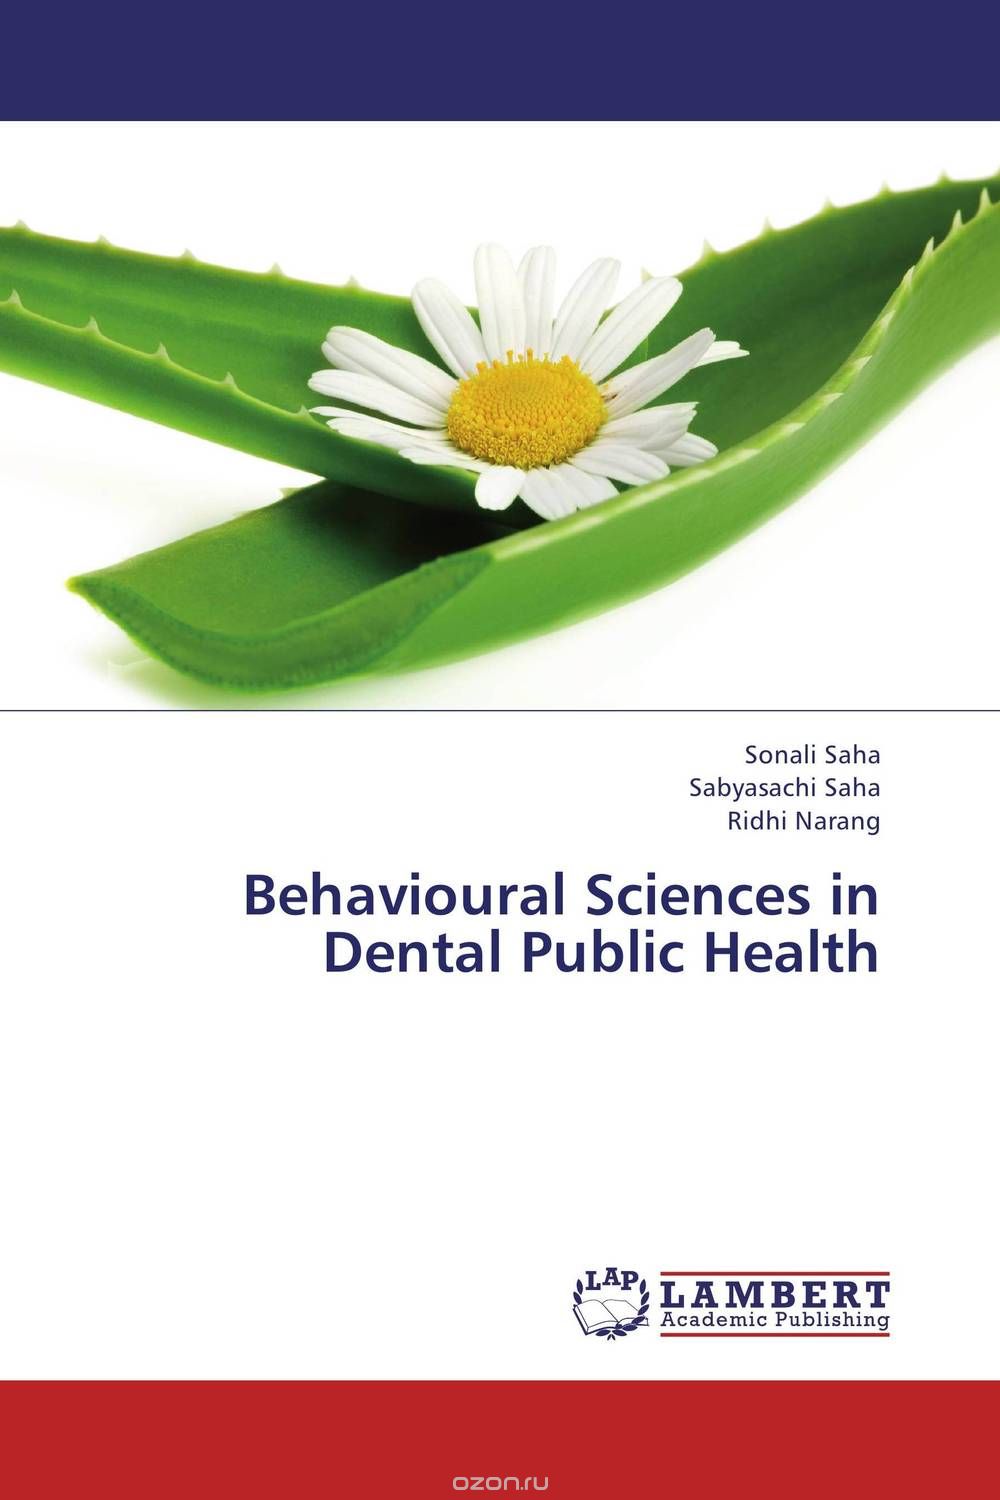 Скачать книгу "Behavioural Sciences in Dental Public Health"